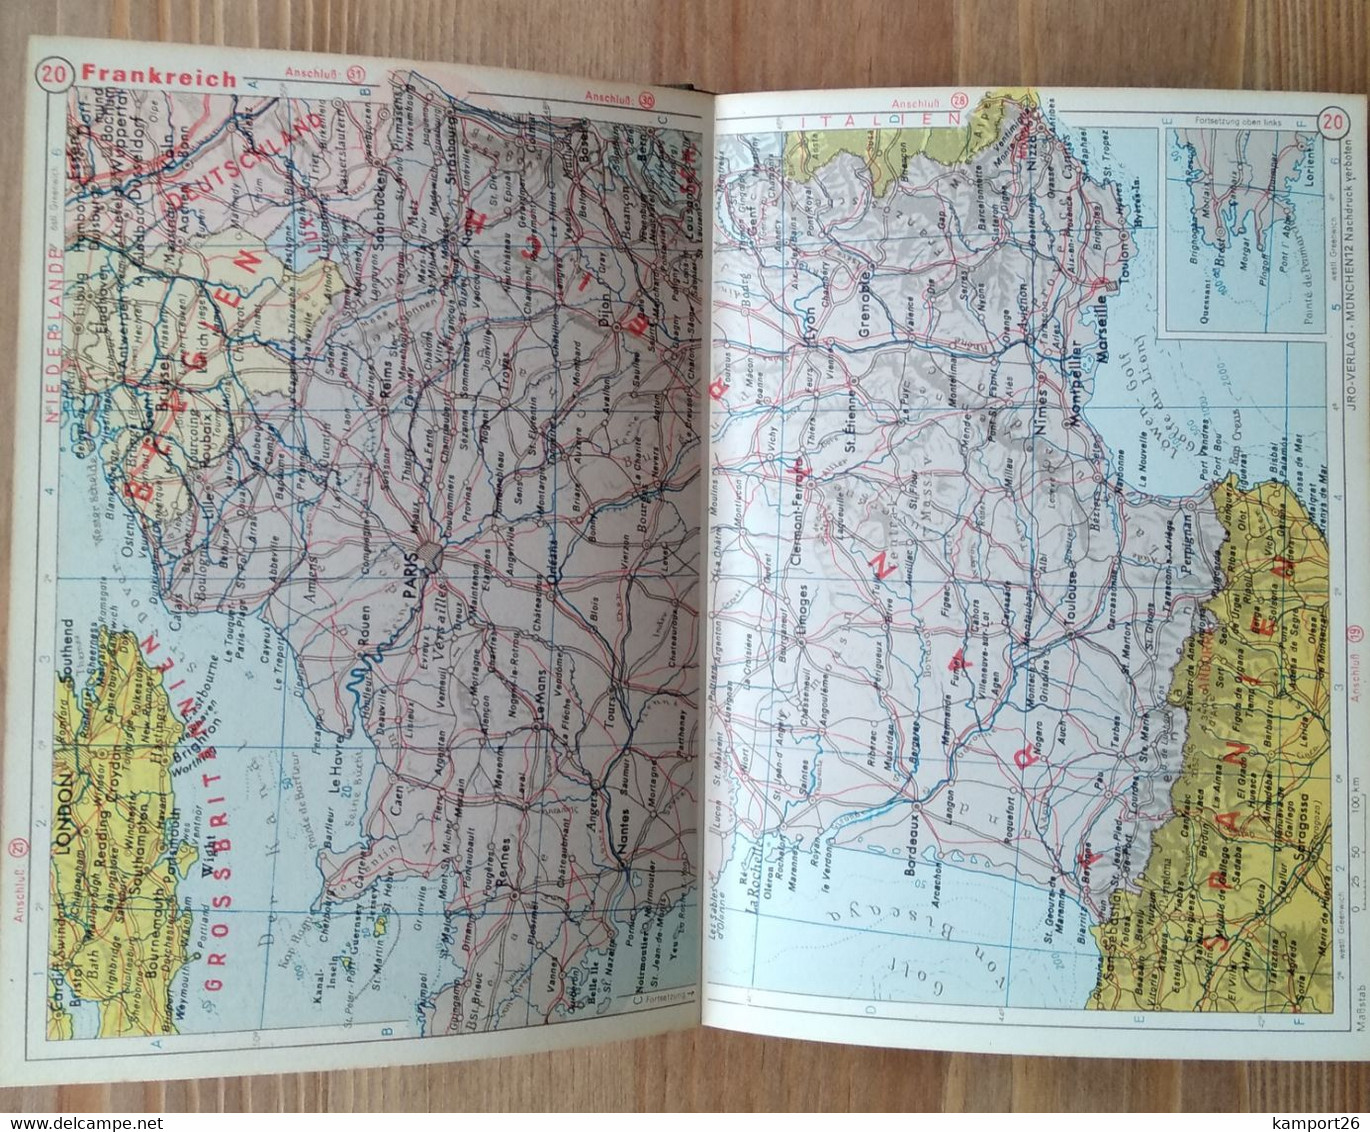 1959 TASCHENATLAS Ernst Kremling CARL PRIOR Illustrated ATLAS Geographic 29rd Edition Maps - Landkarten